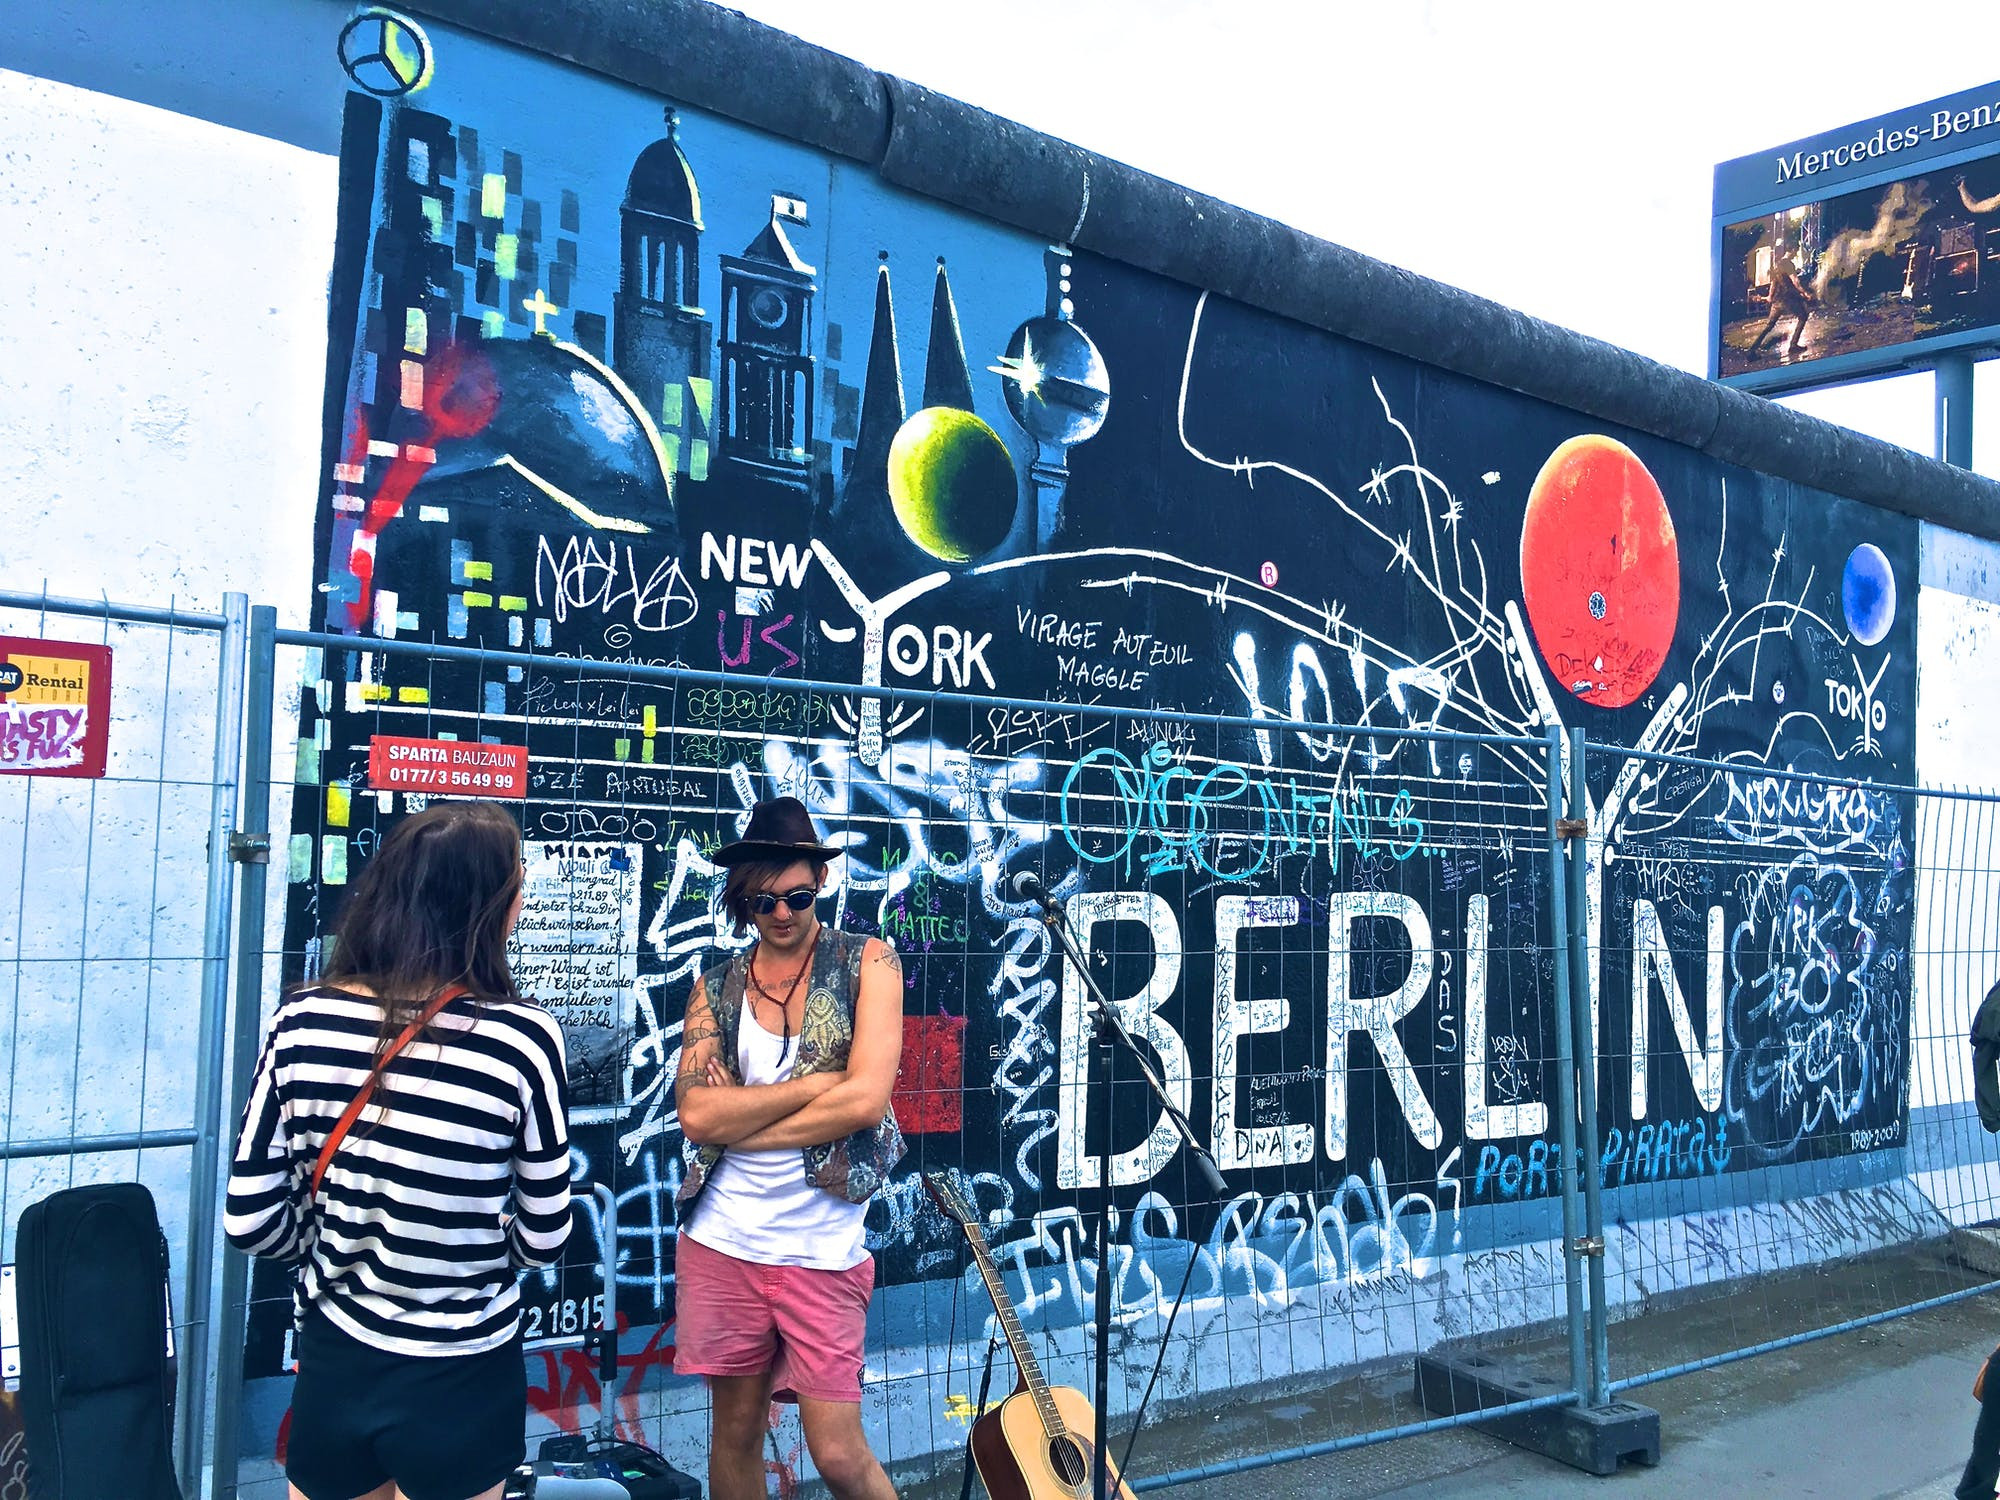 Yπέρ της κοινωνικοποίησης της στέγης ψήφισε το Βερολίνο